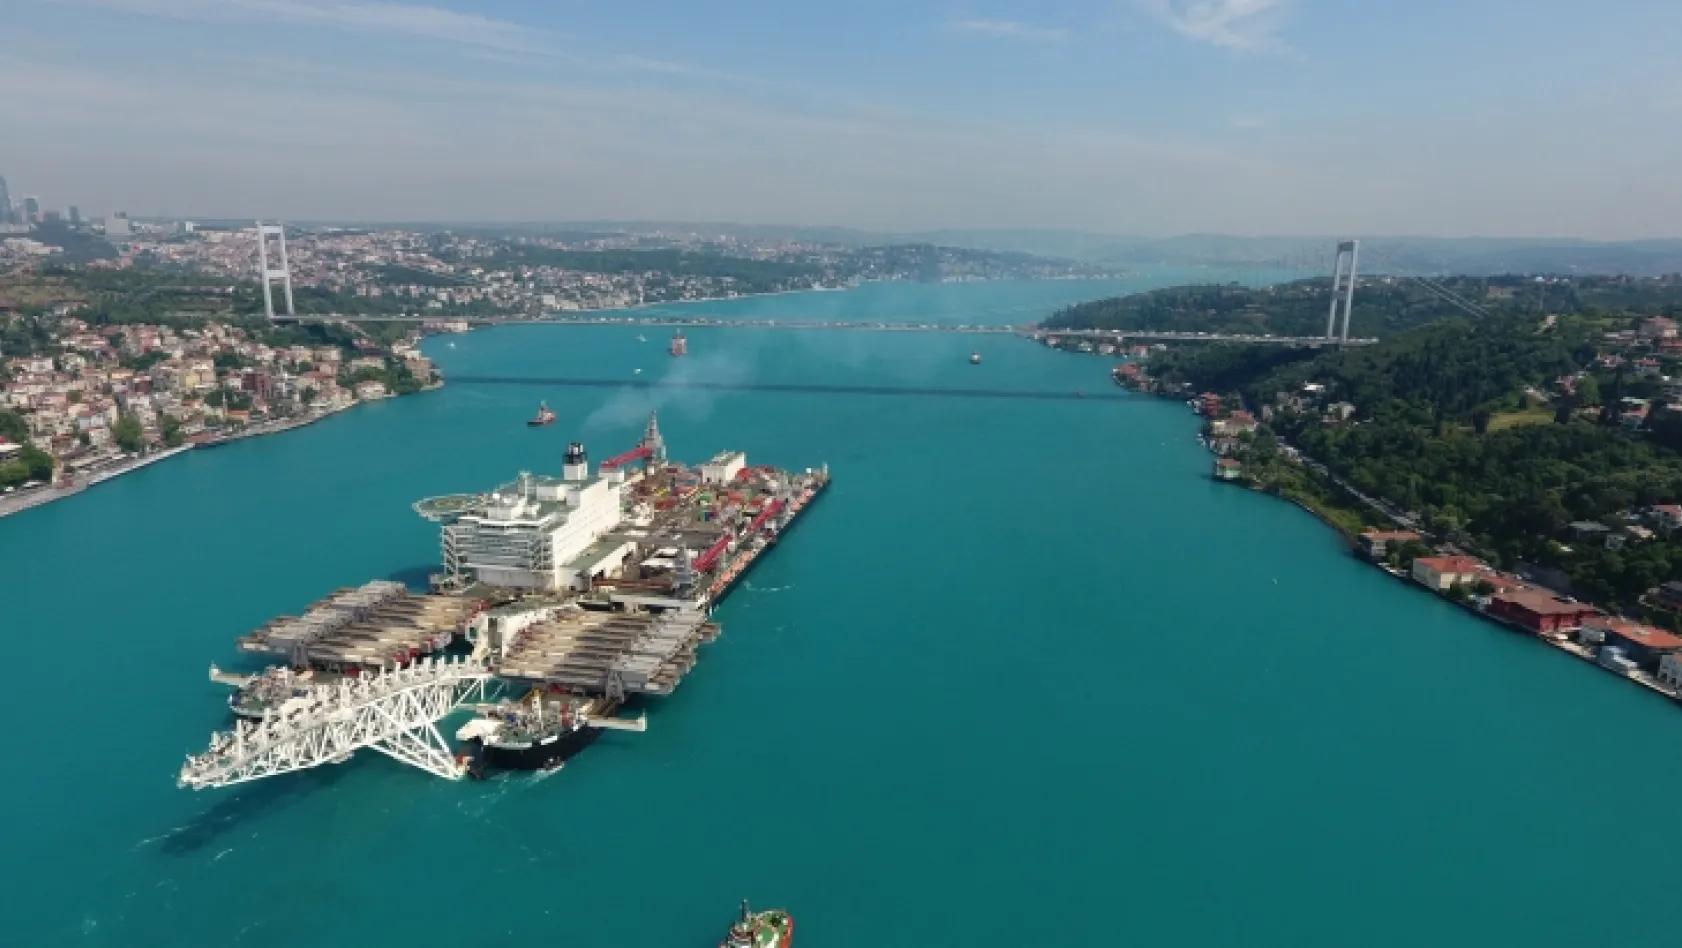 Dev gemi İstanbul Boğazı'nda